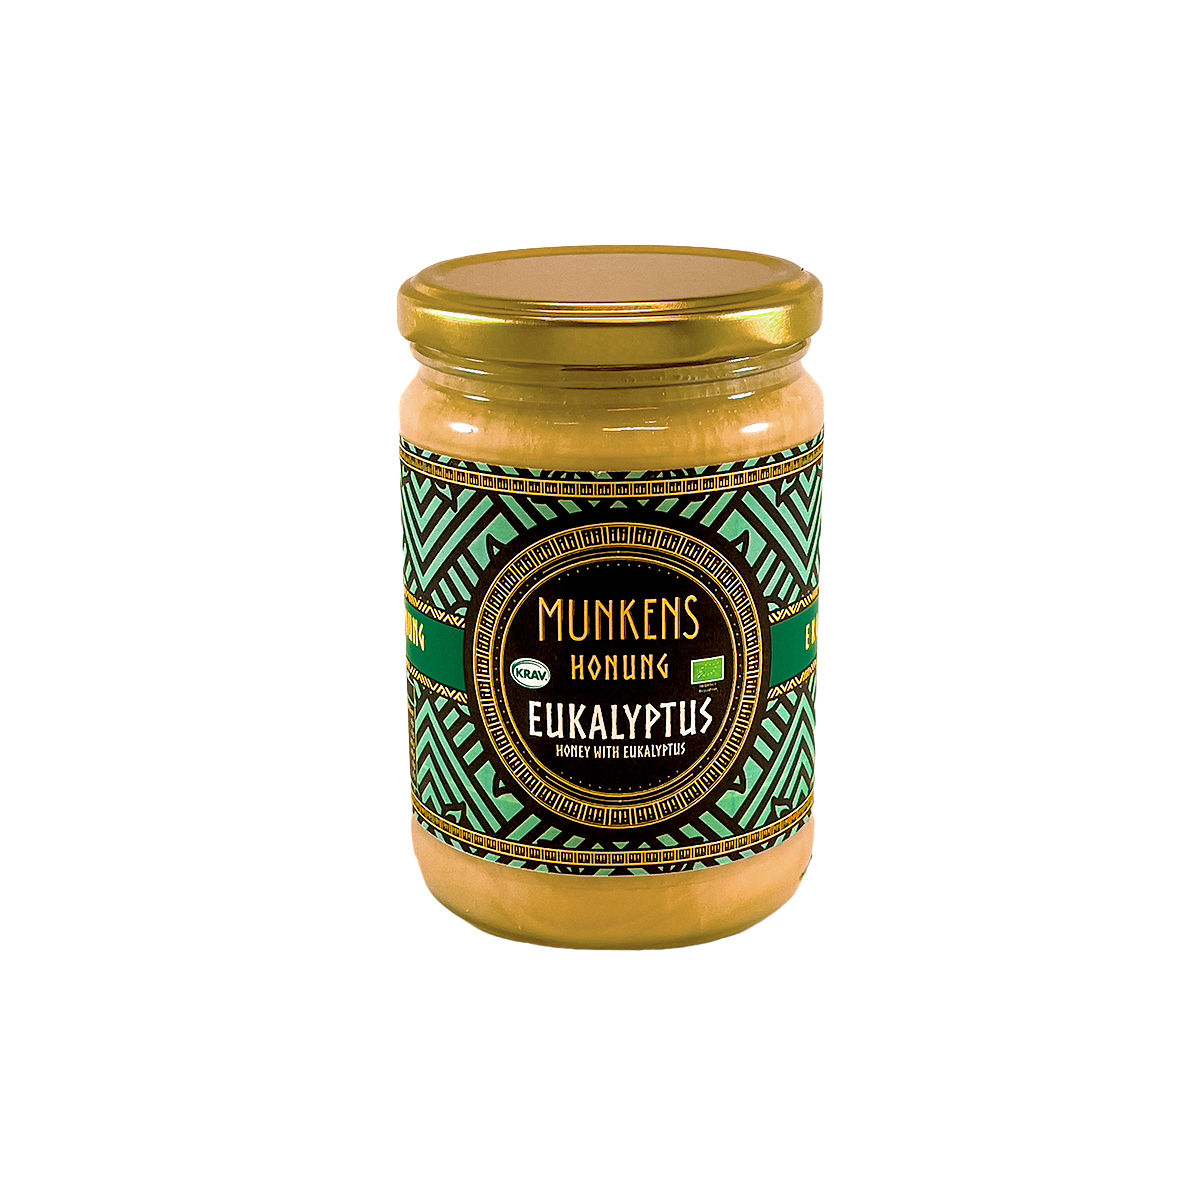 Munkens Honung – Kallrörd:Rå:Raw – Eukalyptus 500g